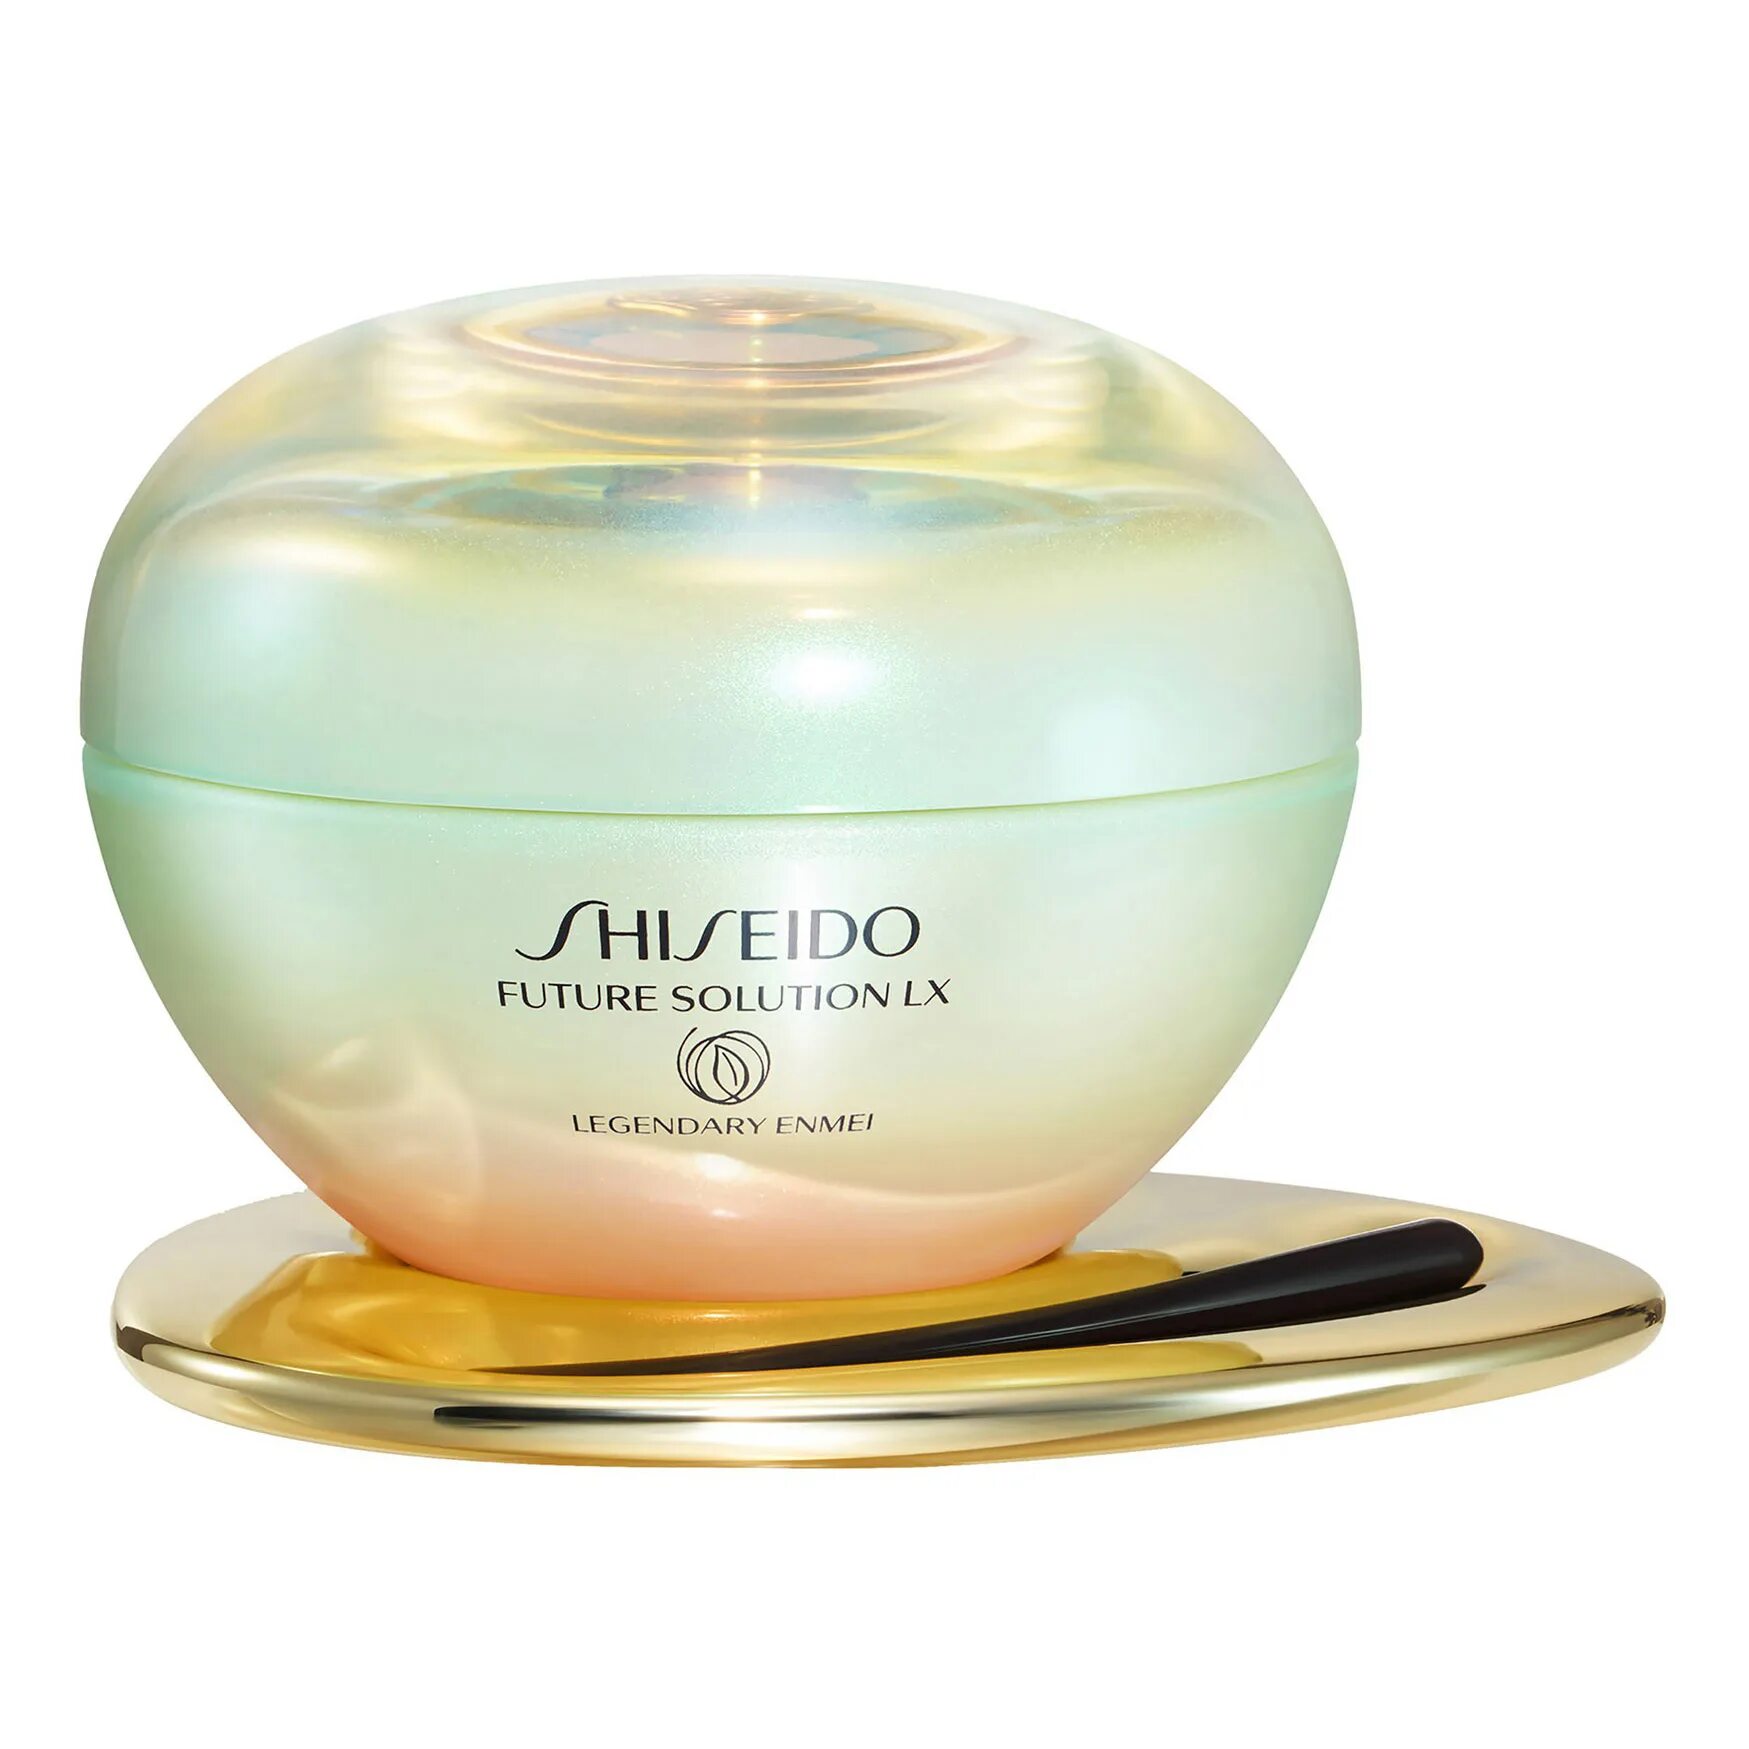 Shiseido Future solution LX. Крем Shiseido Future solution. "Shiseido Future solution LX E total Radiance Foundation"+"Neutral 2". Future solution Legendary Enmei.